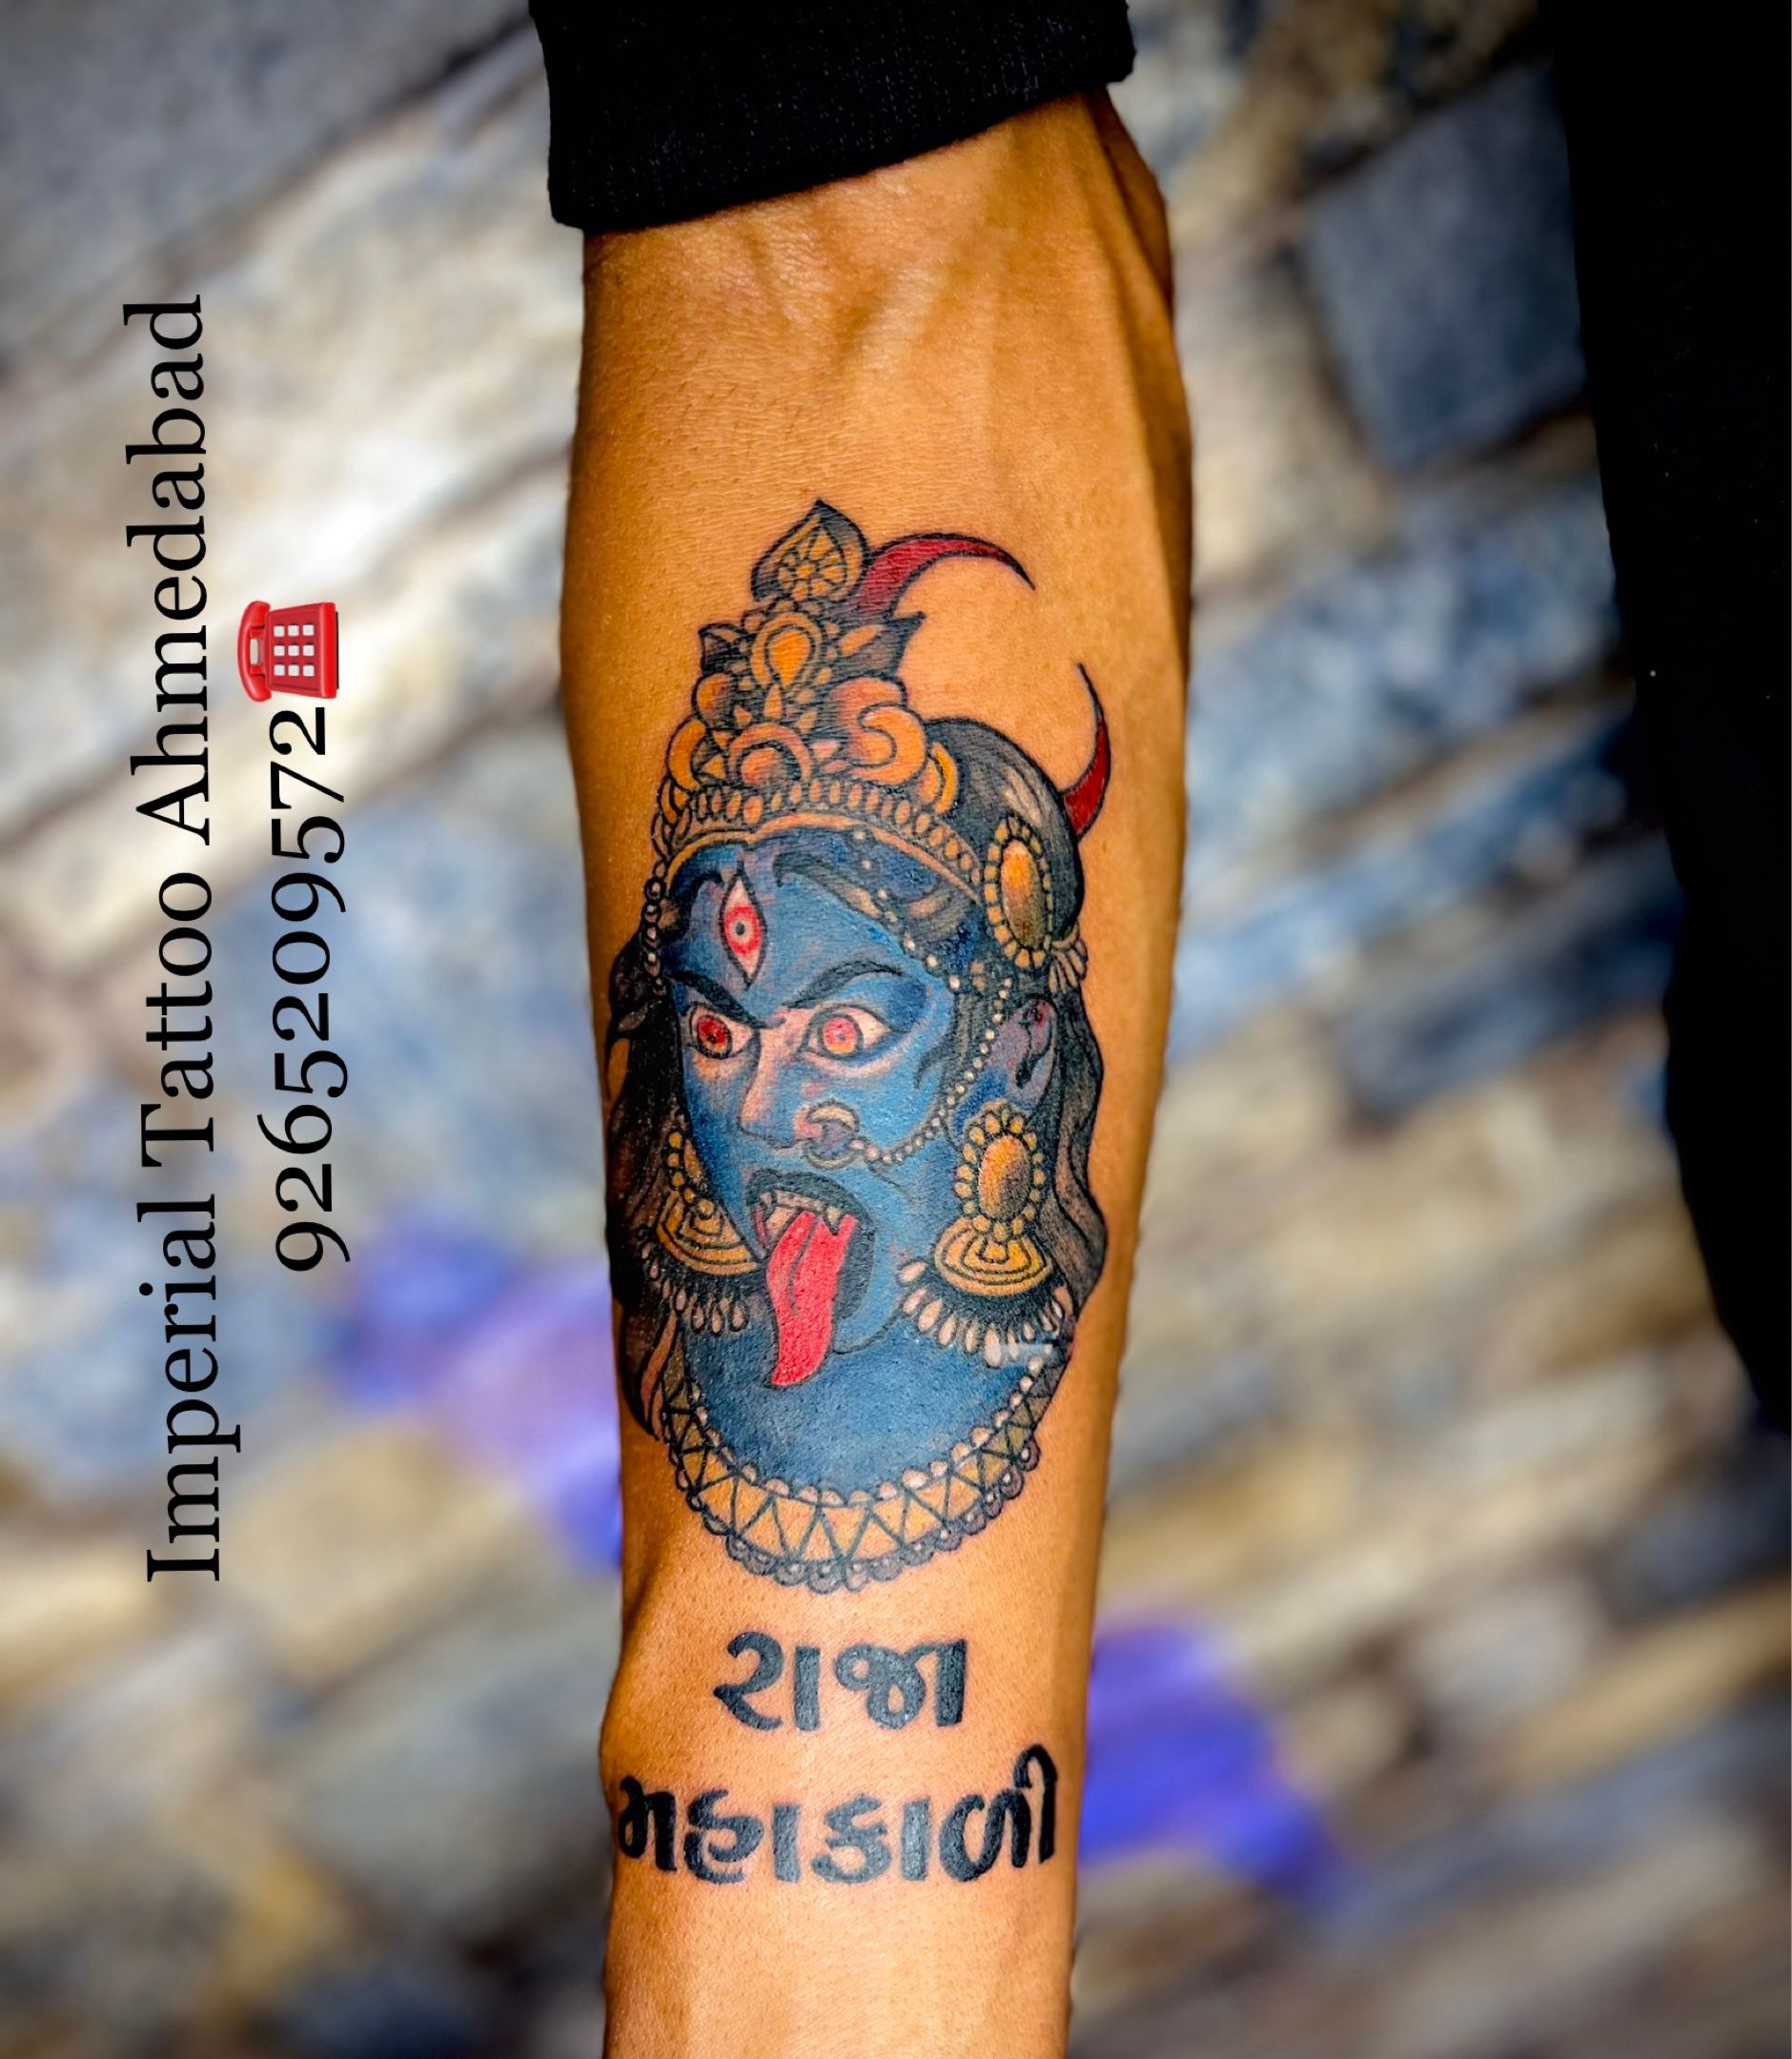 Lord Shiva Hand Tattoo Ideas  Mahadeva Tattoo on Hand  TiptopGents